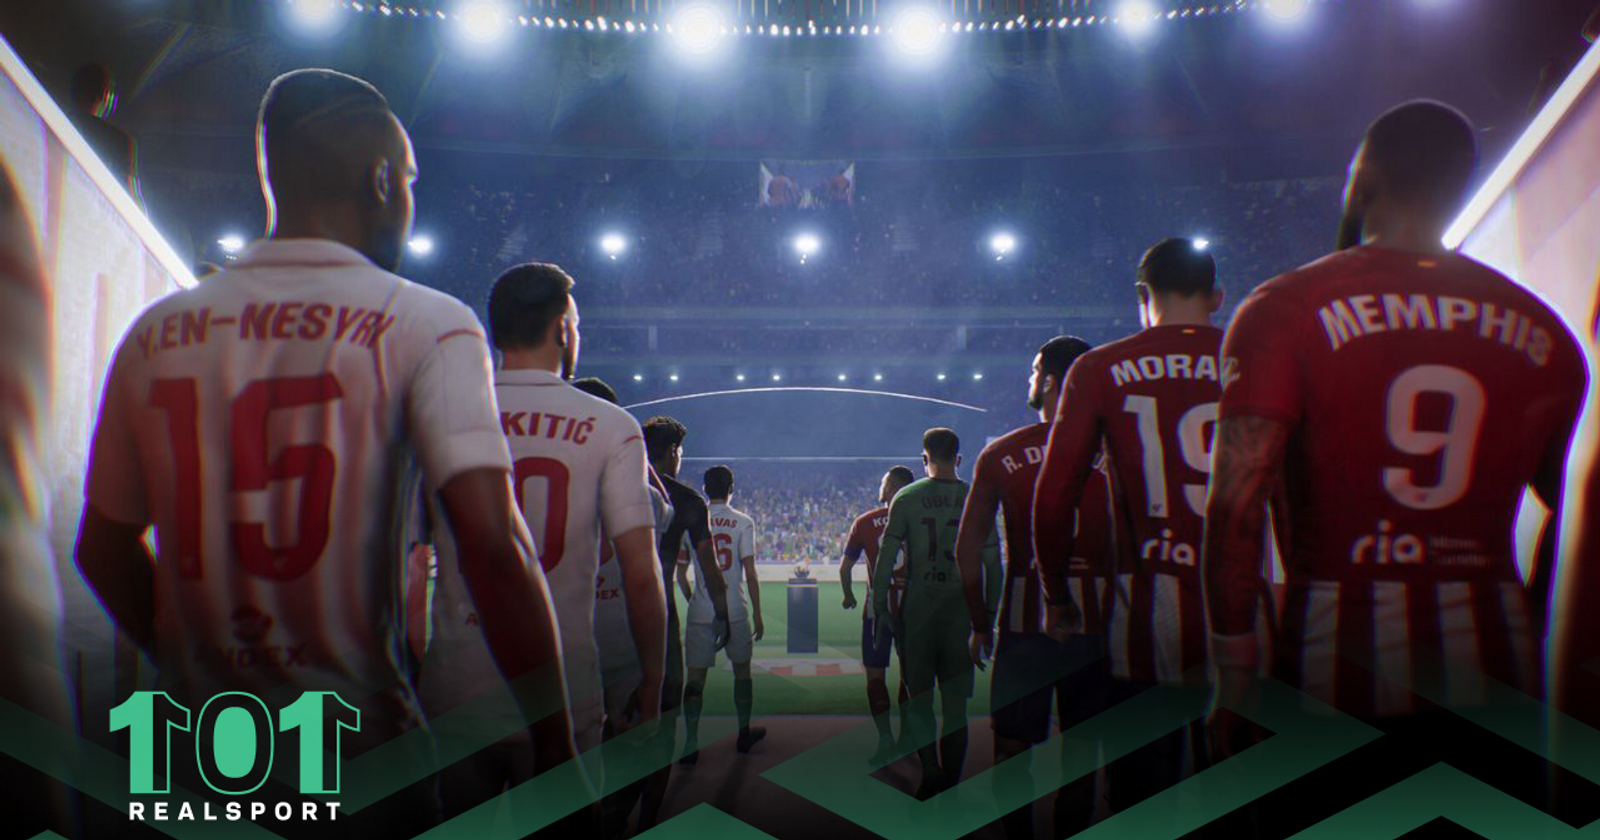 EA SPORTS FC 24 - Cross-play no EA SPORTS FC™ 24